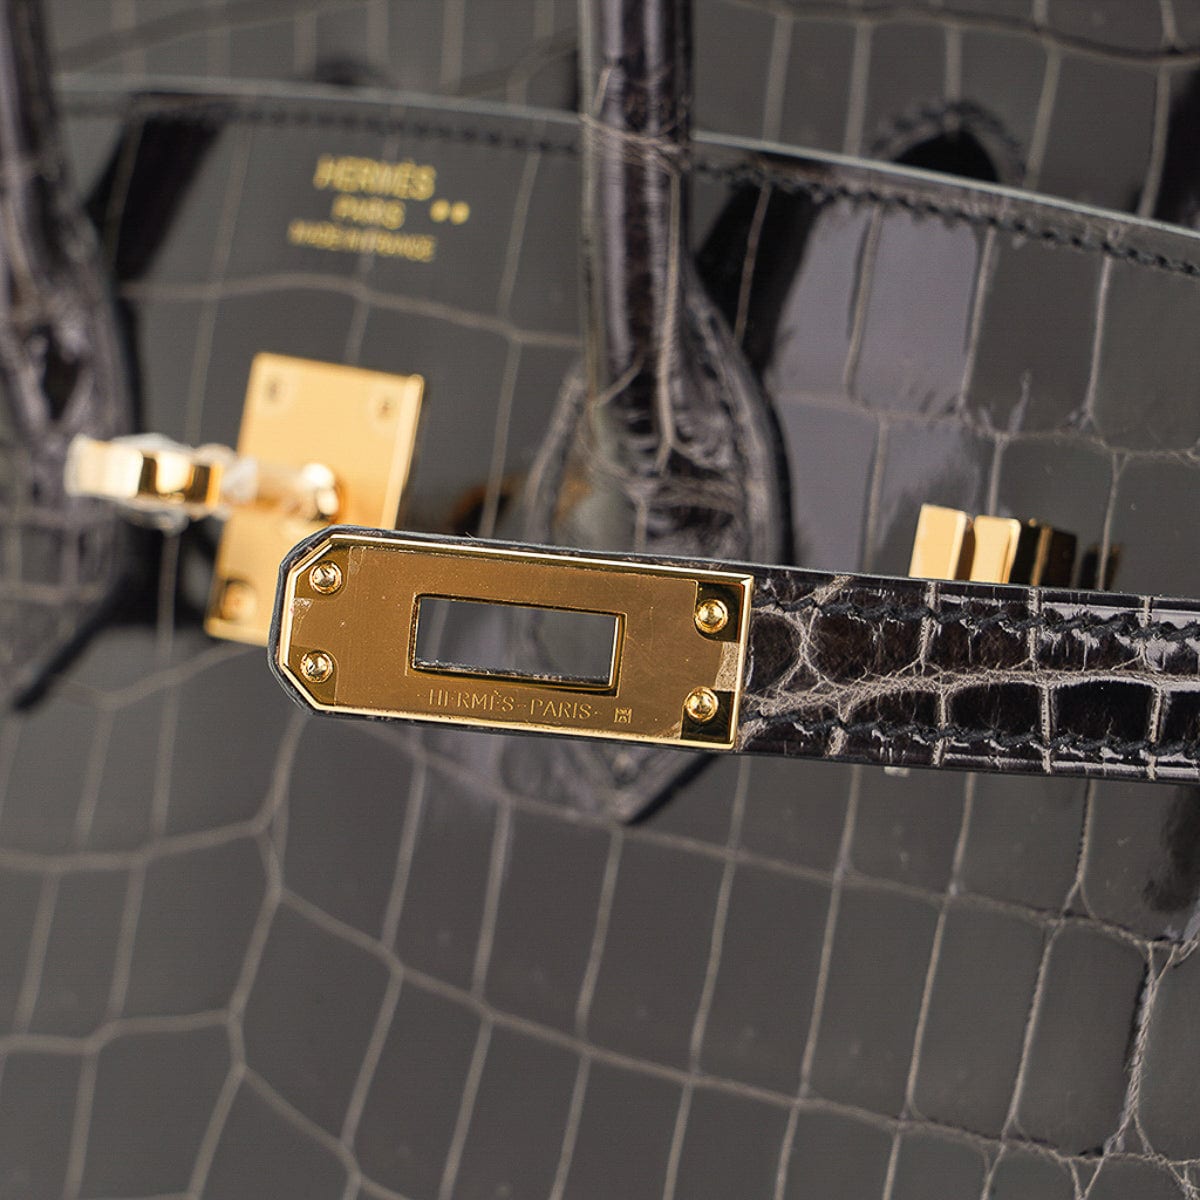 Hermes Birkin 25 Bag Emerald Crocodile Gold Hardware • MIGHTYCHIC